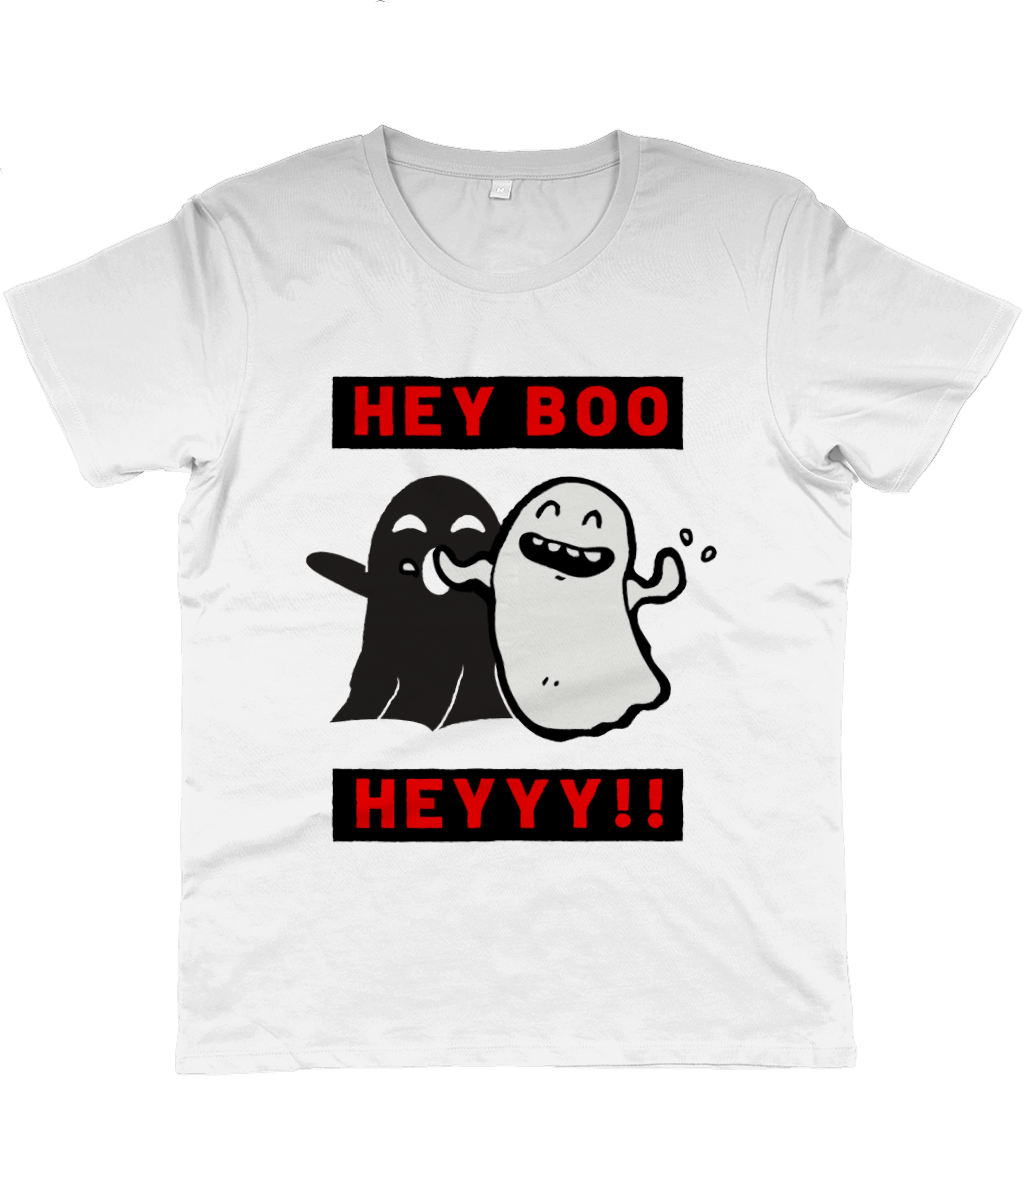 "¡HEY BOO HEYYY!" Camiseta estampada de jersey